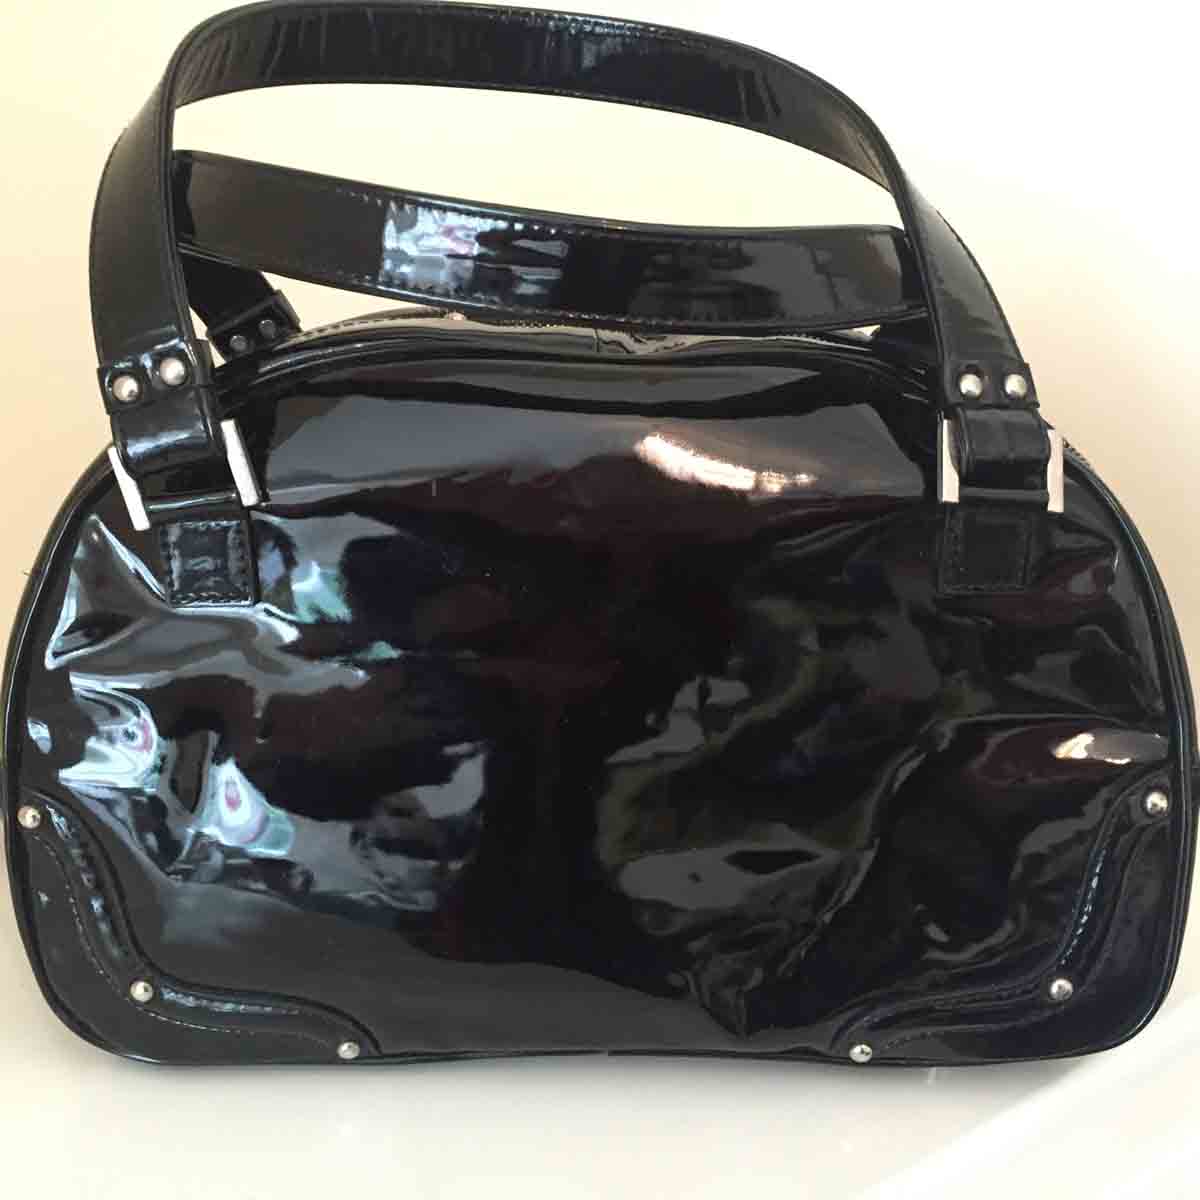 New and Very Rare Luella handbag - Seeking Perfect Purchase